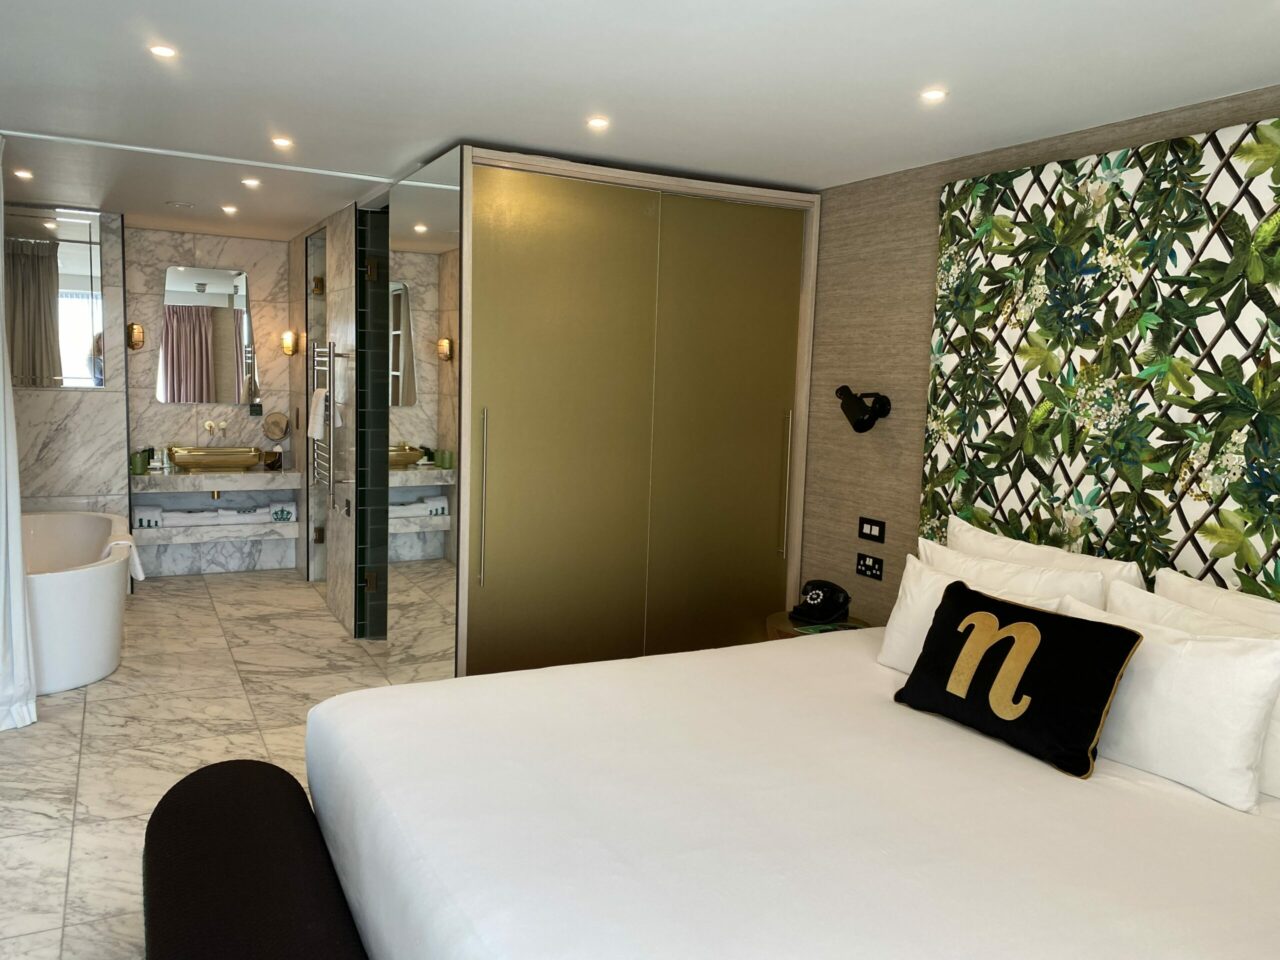 Bedroom of nHow London hotel